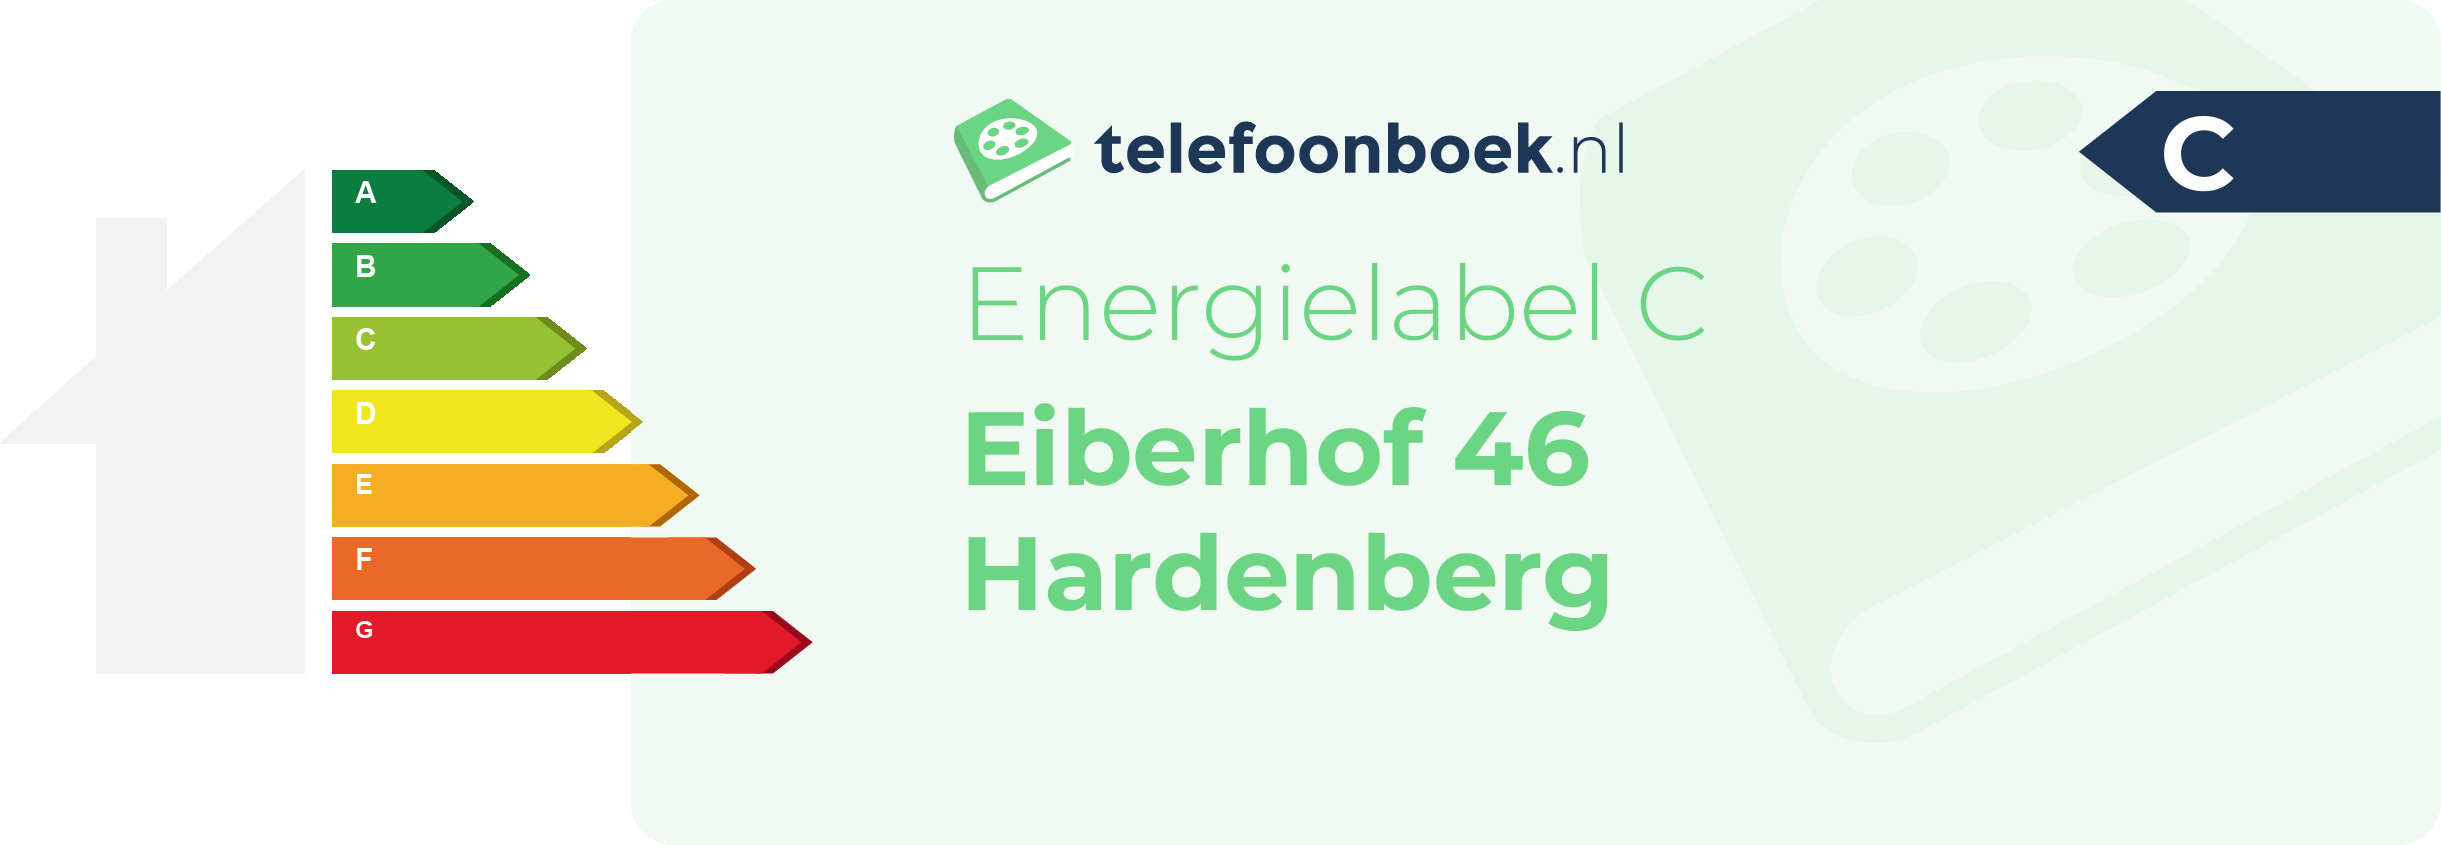 Energielabel Eiberhof 46 Hardenberg